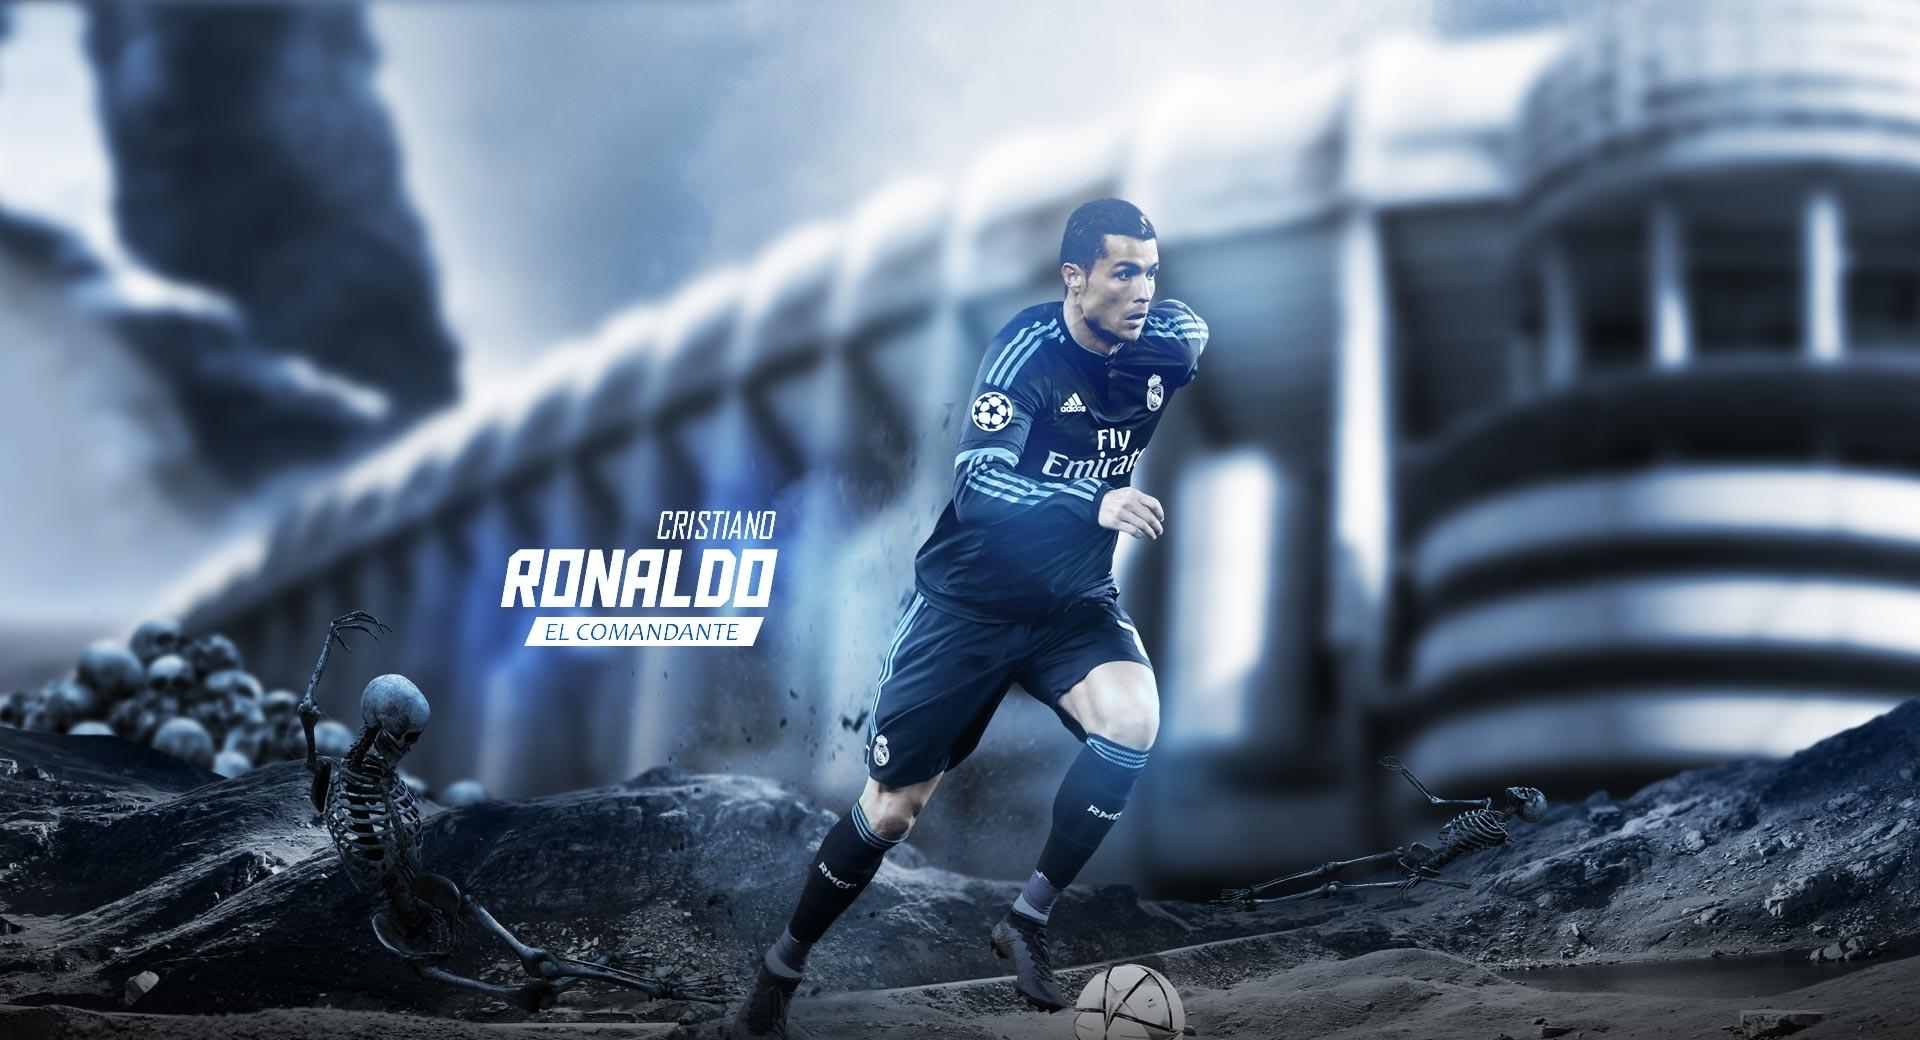 Cristiano Ronaldo - El Comandante at 1024 x 768 size wallpapers HD quality